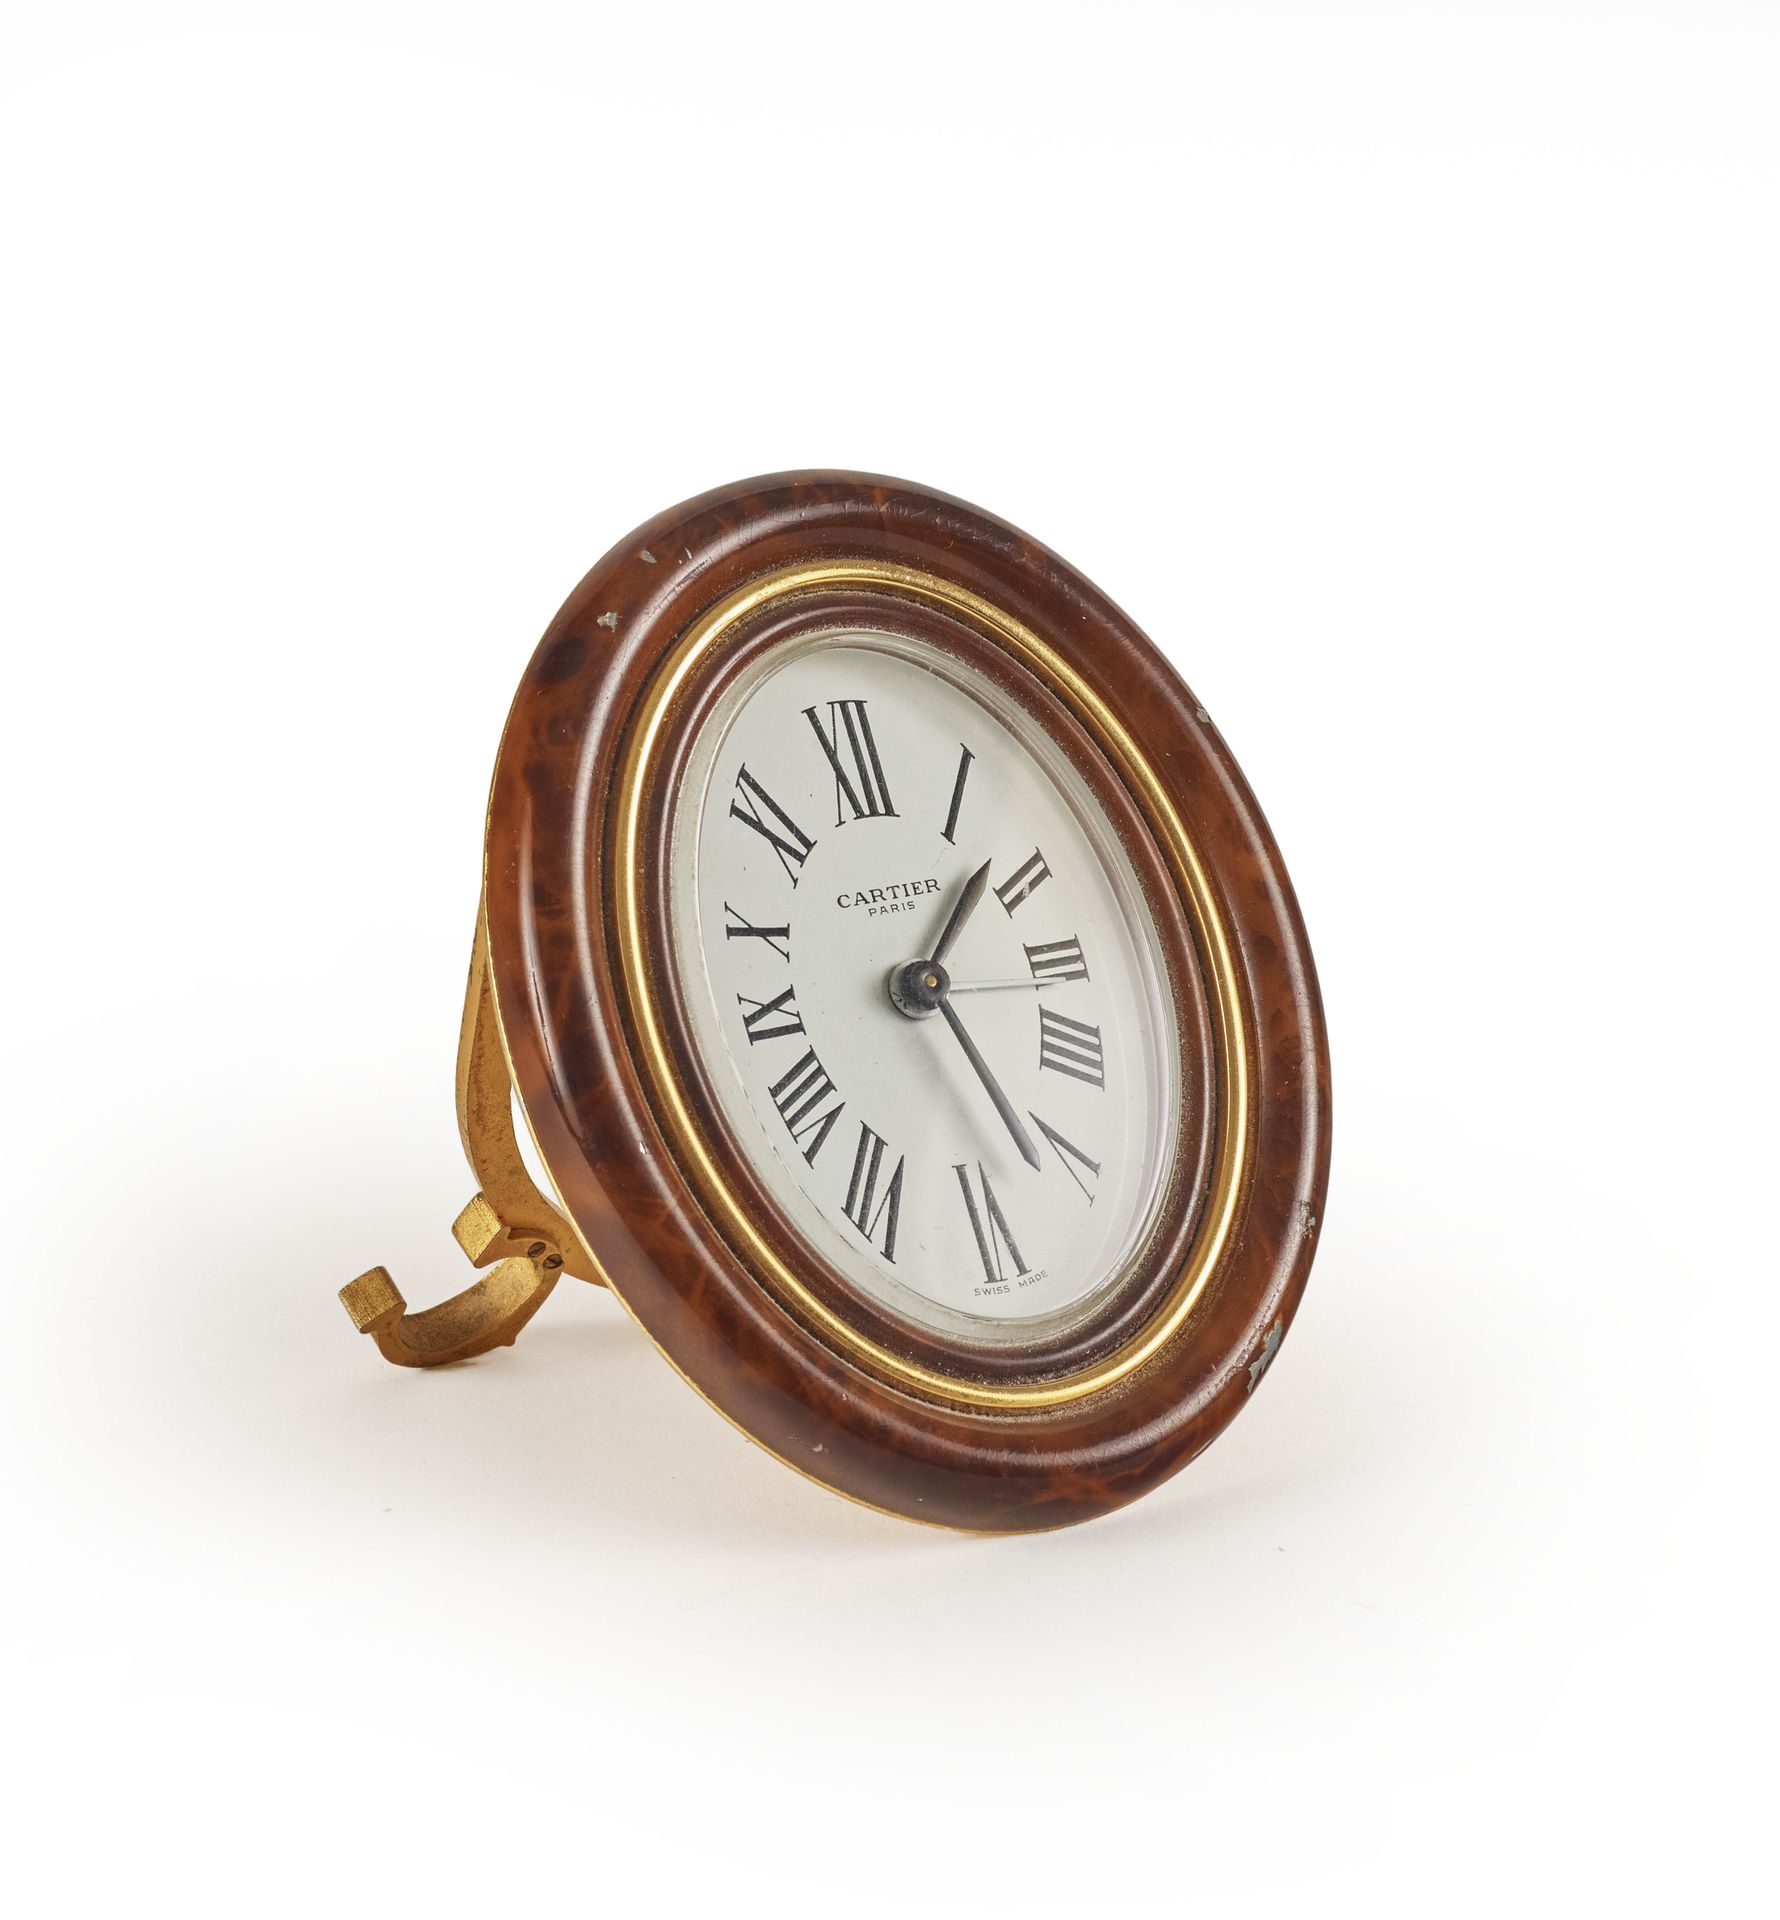 Null 巴黎卡地亚公司

鎏金黄铜和仿玳瑁组成的小台闹钟

H.9厘米

(薯片，原样)